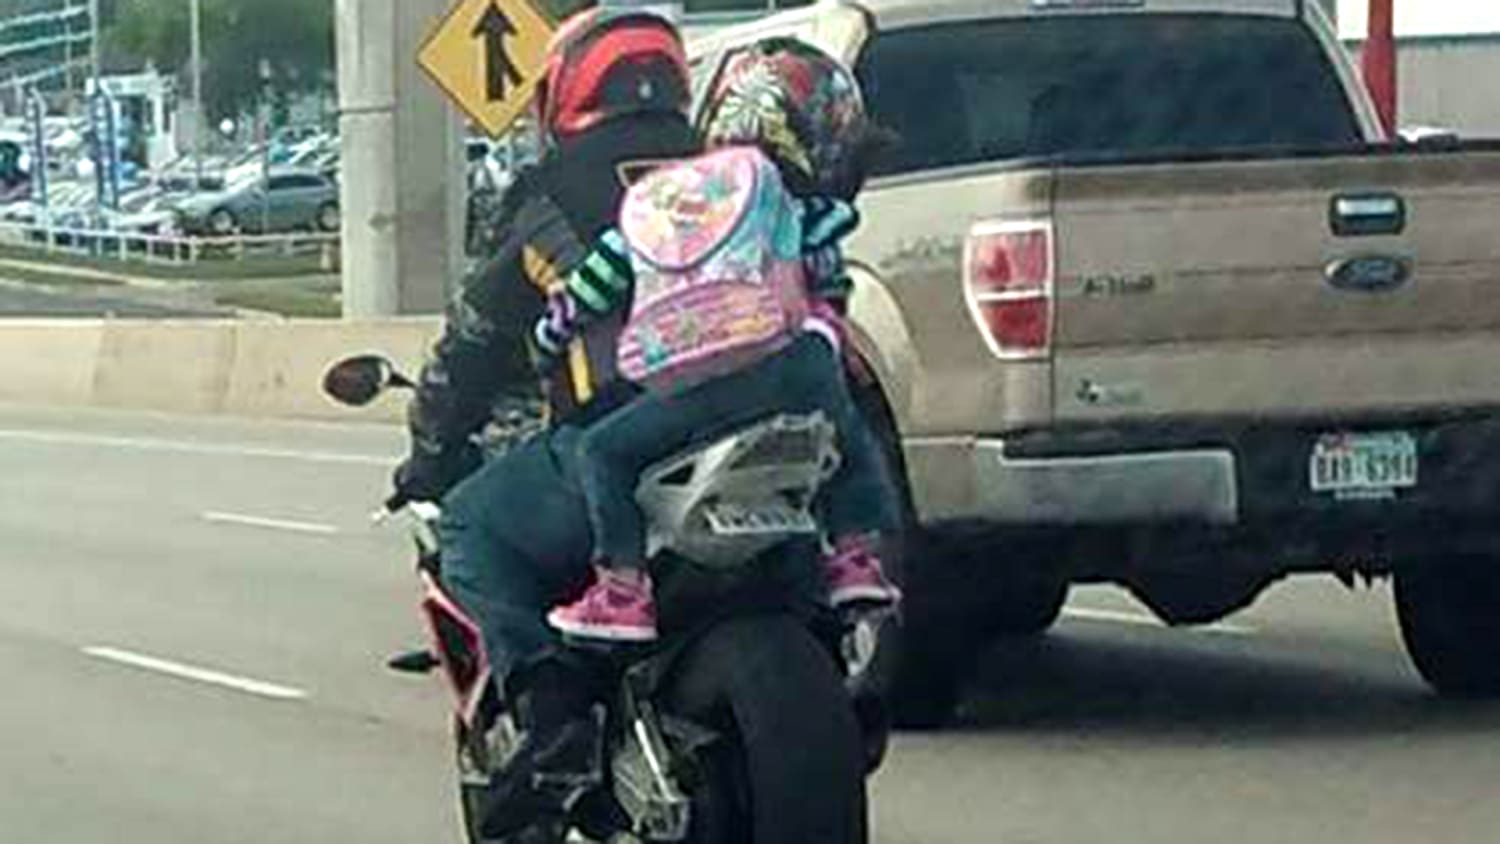 toddler ride on motorcycle